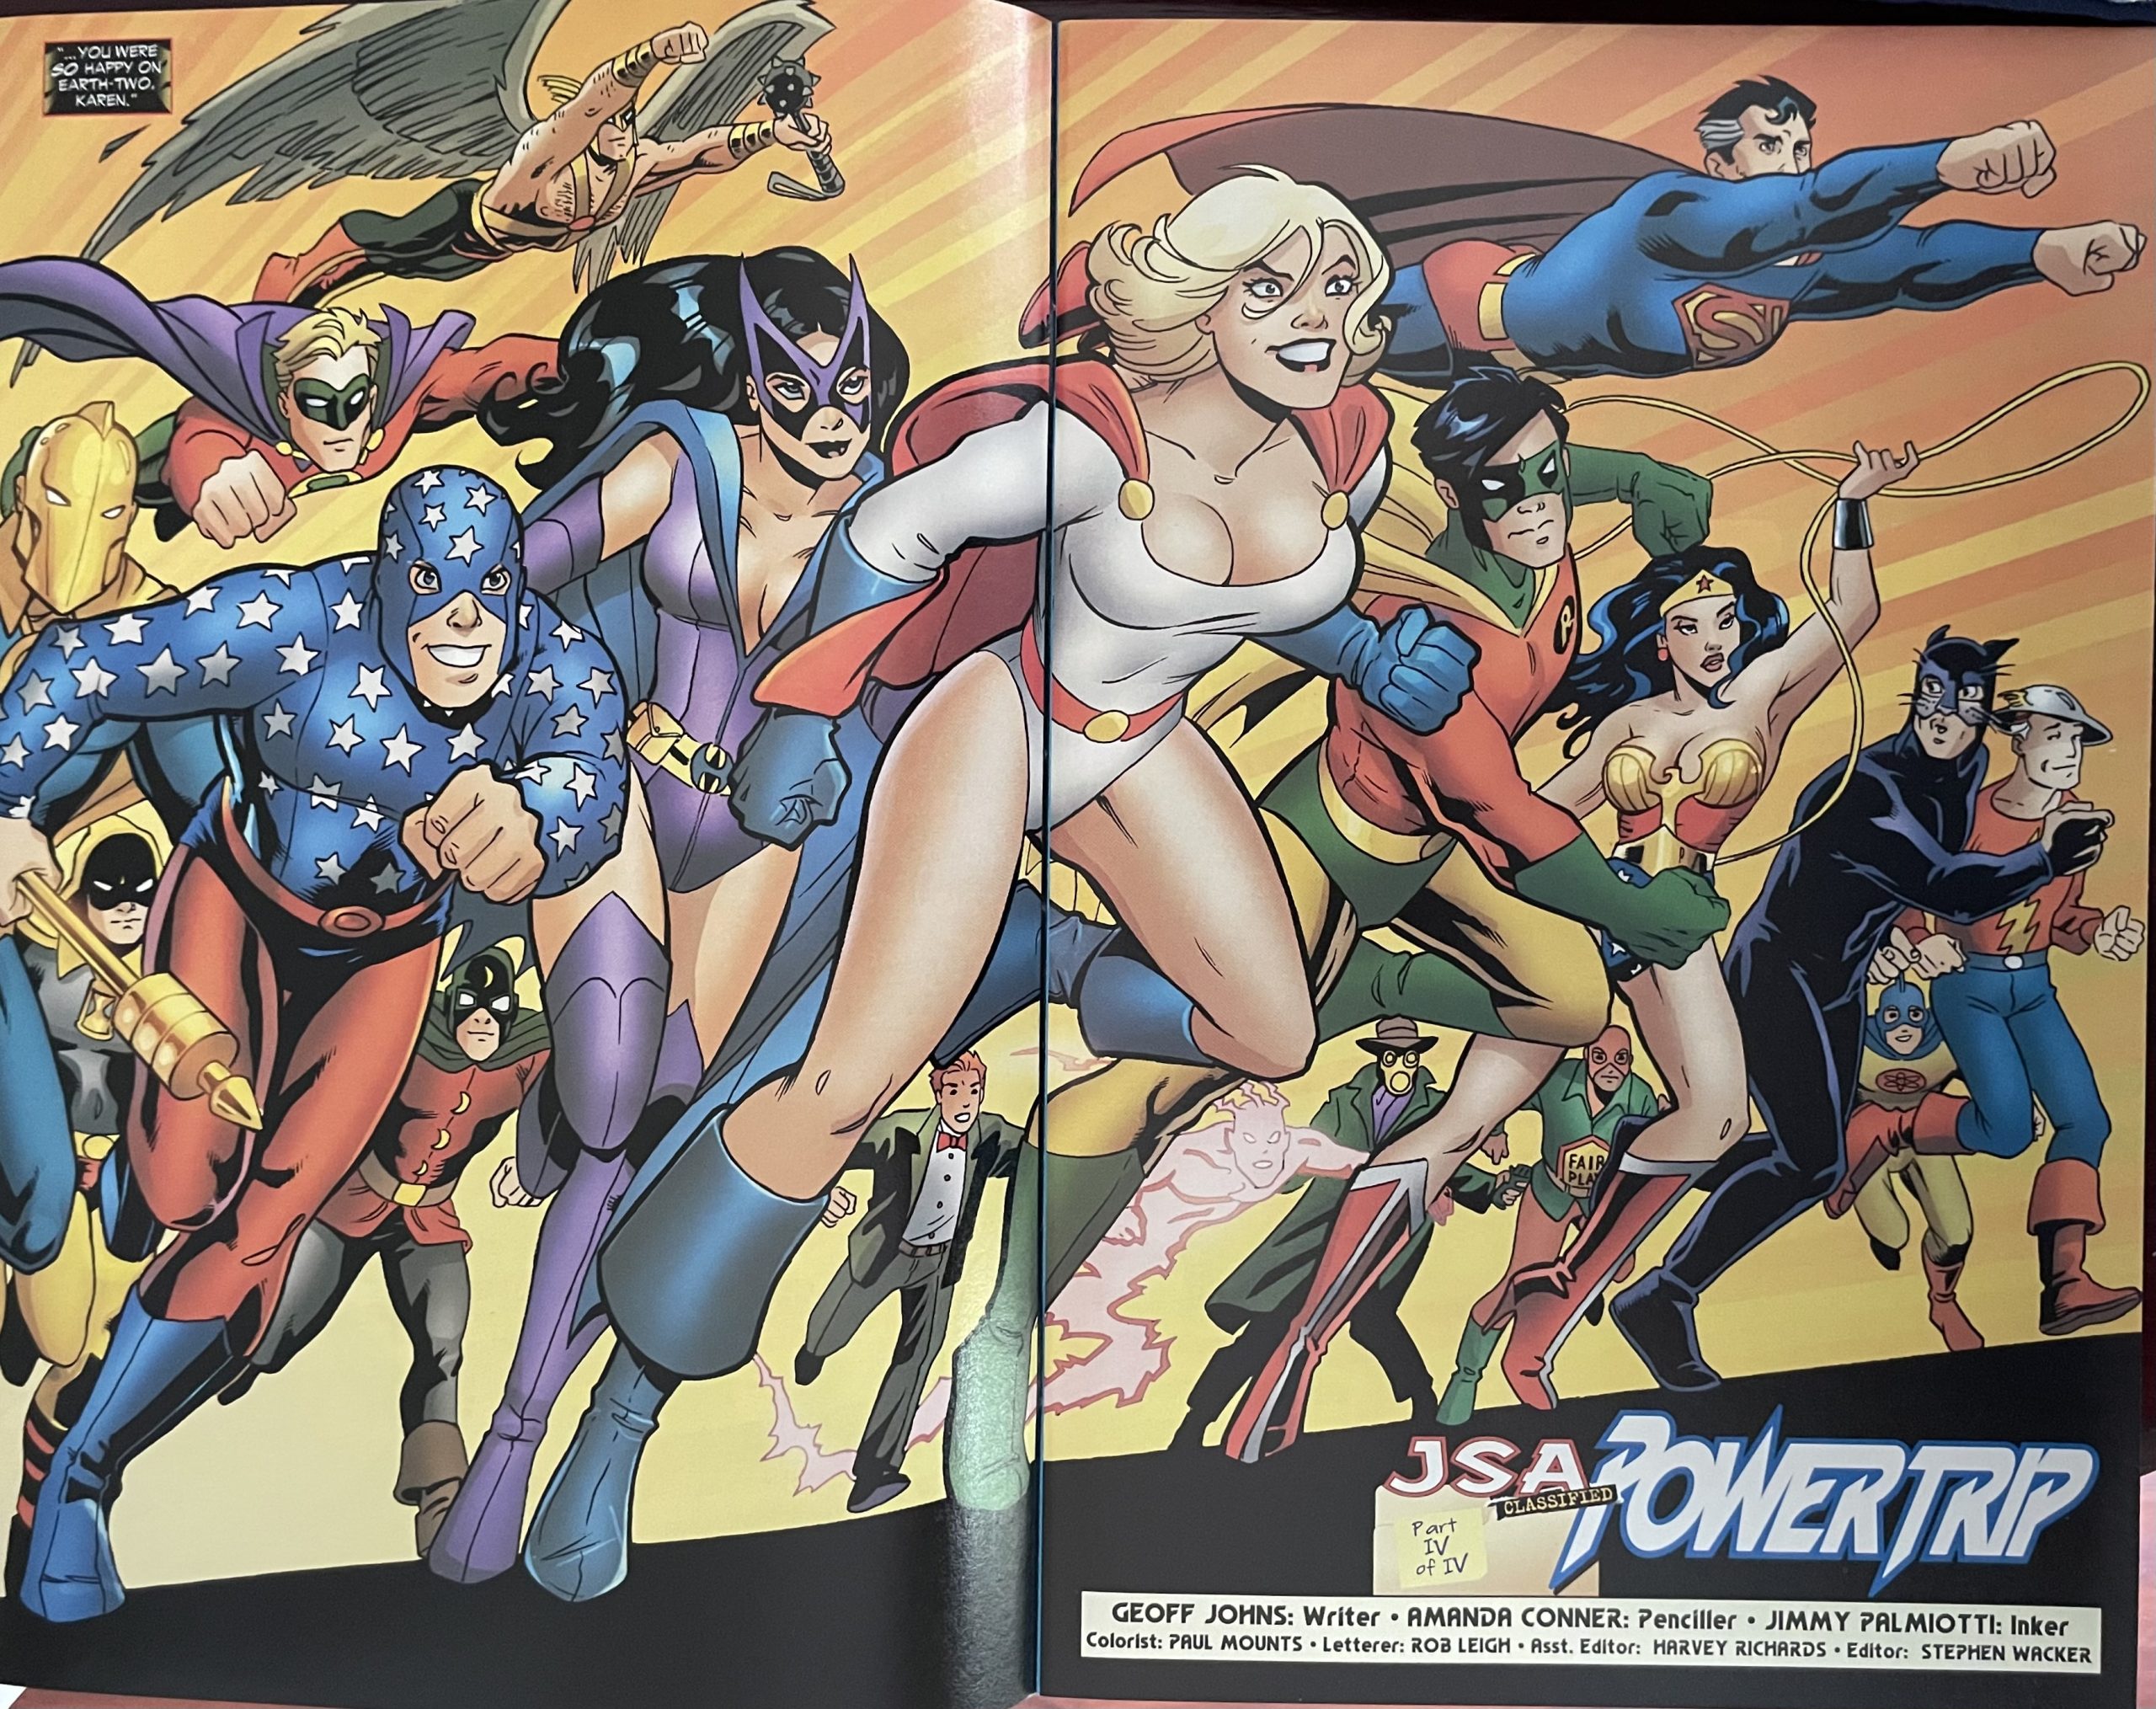 Power Girl Happy on Earth-Two DC Comics News